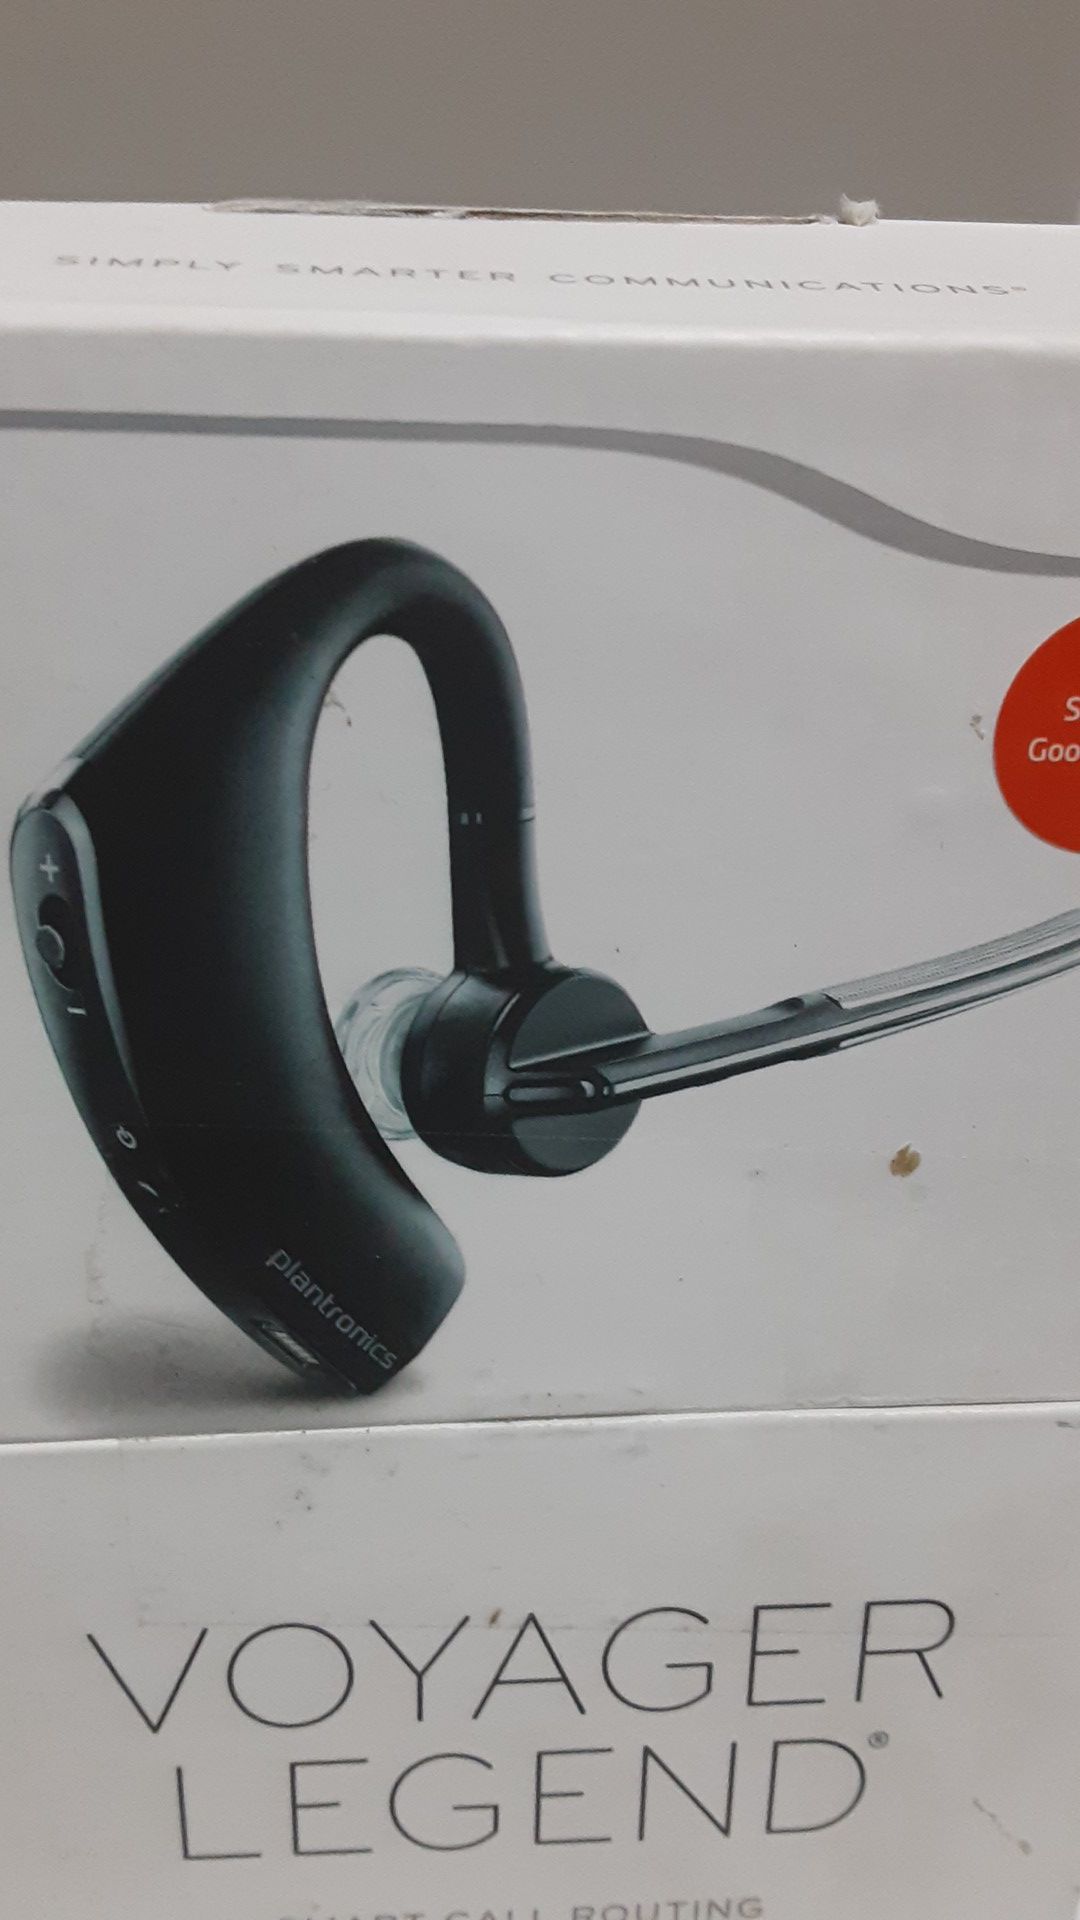 Wirelees bluetooth headset plantronic